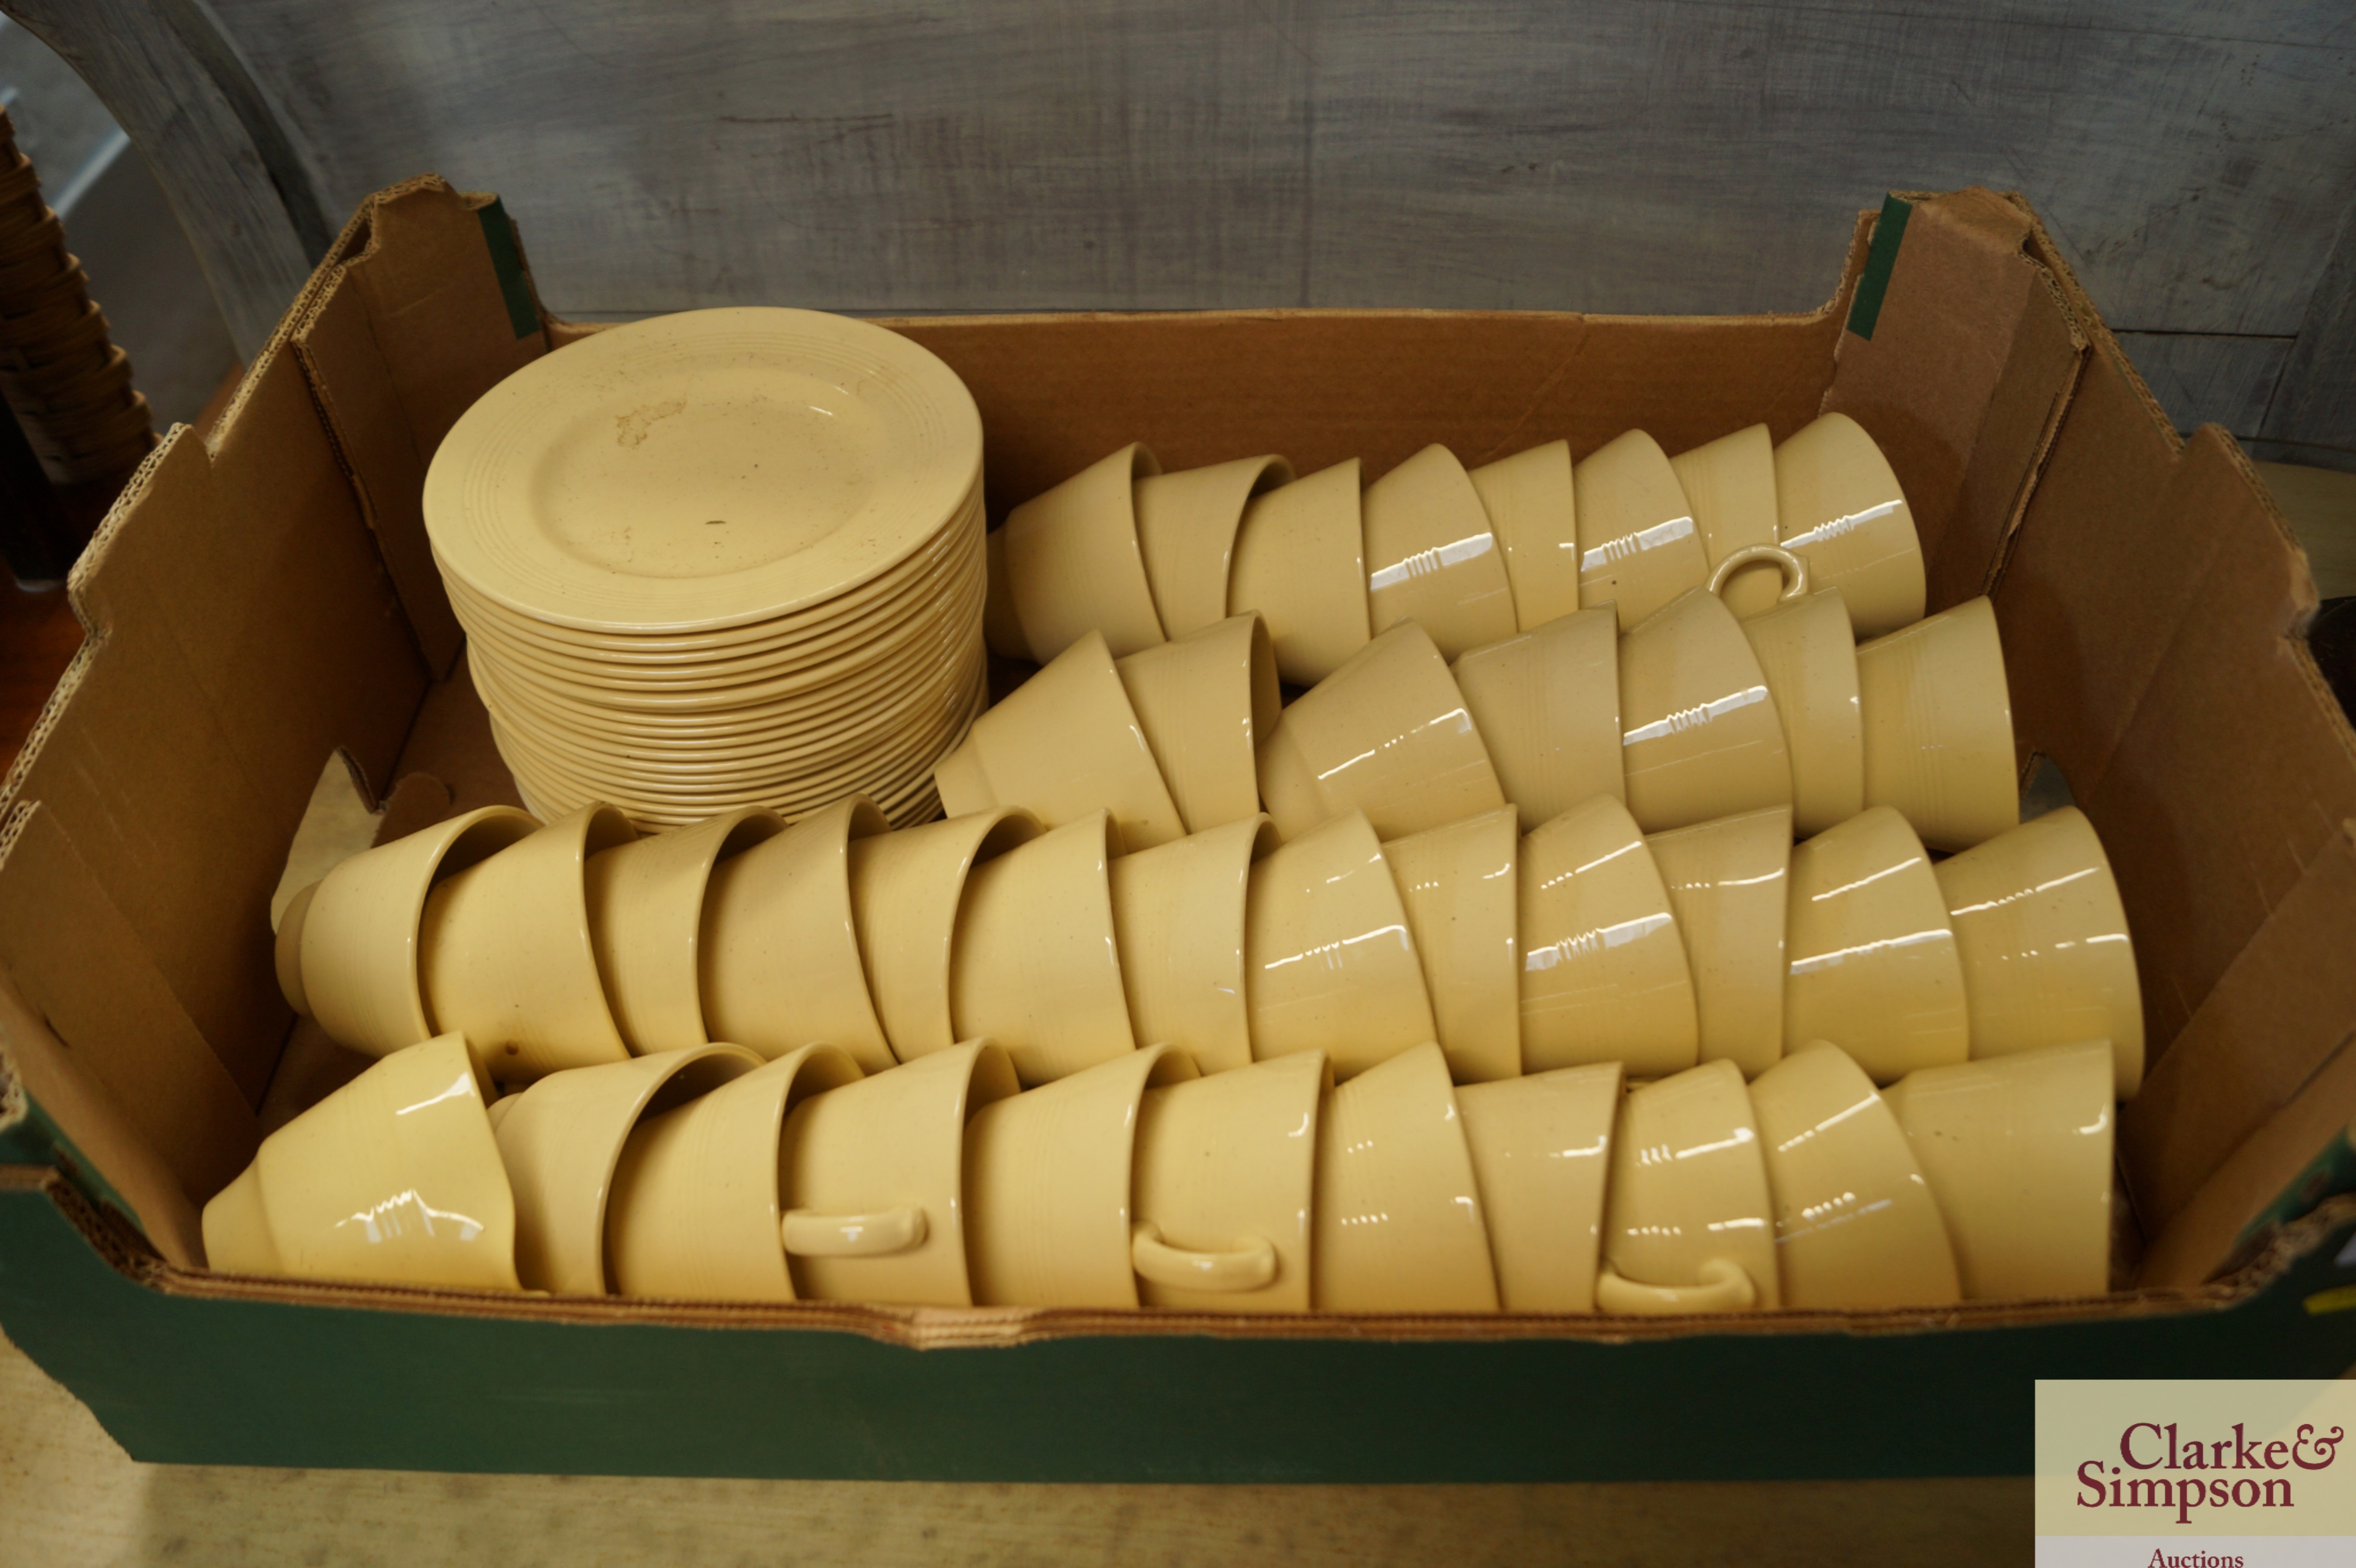 A quantity of Wood & Sons "Jasmine" teaware,